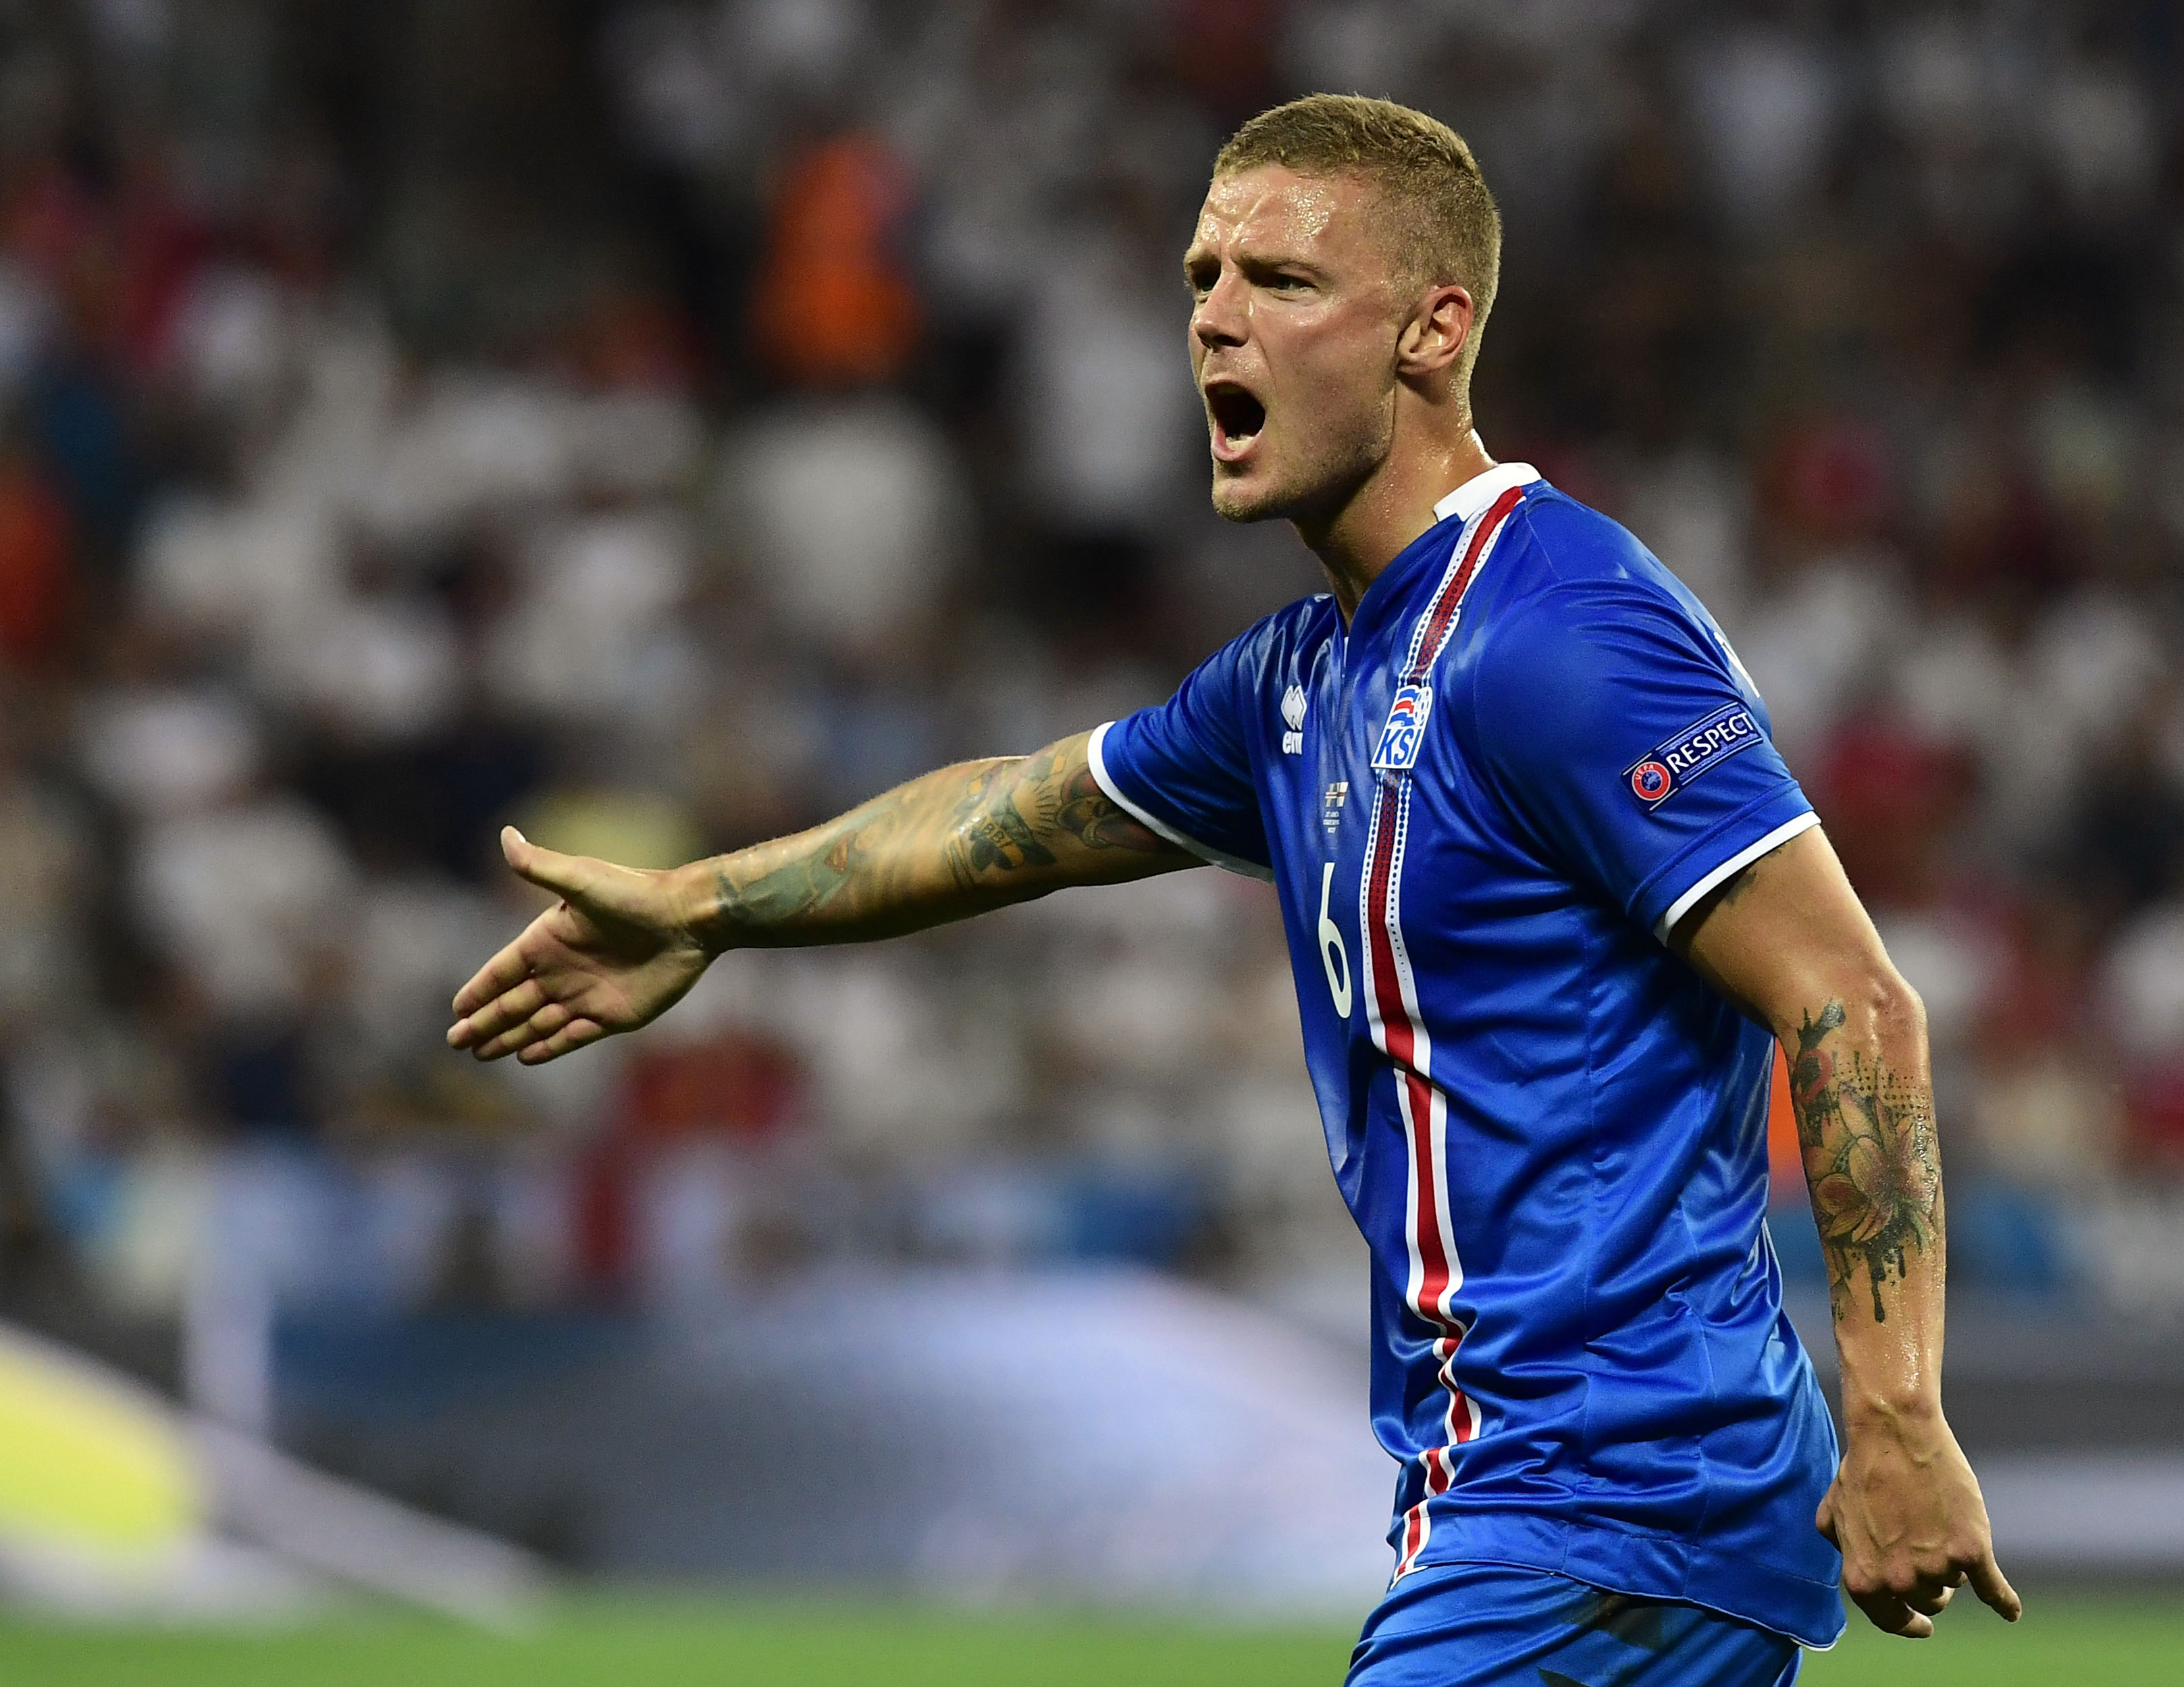 Euro 2016: Iceland knock England out as coach Hodgson quits